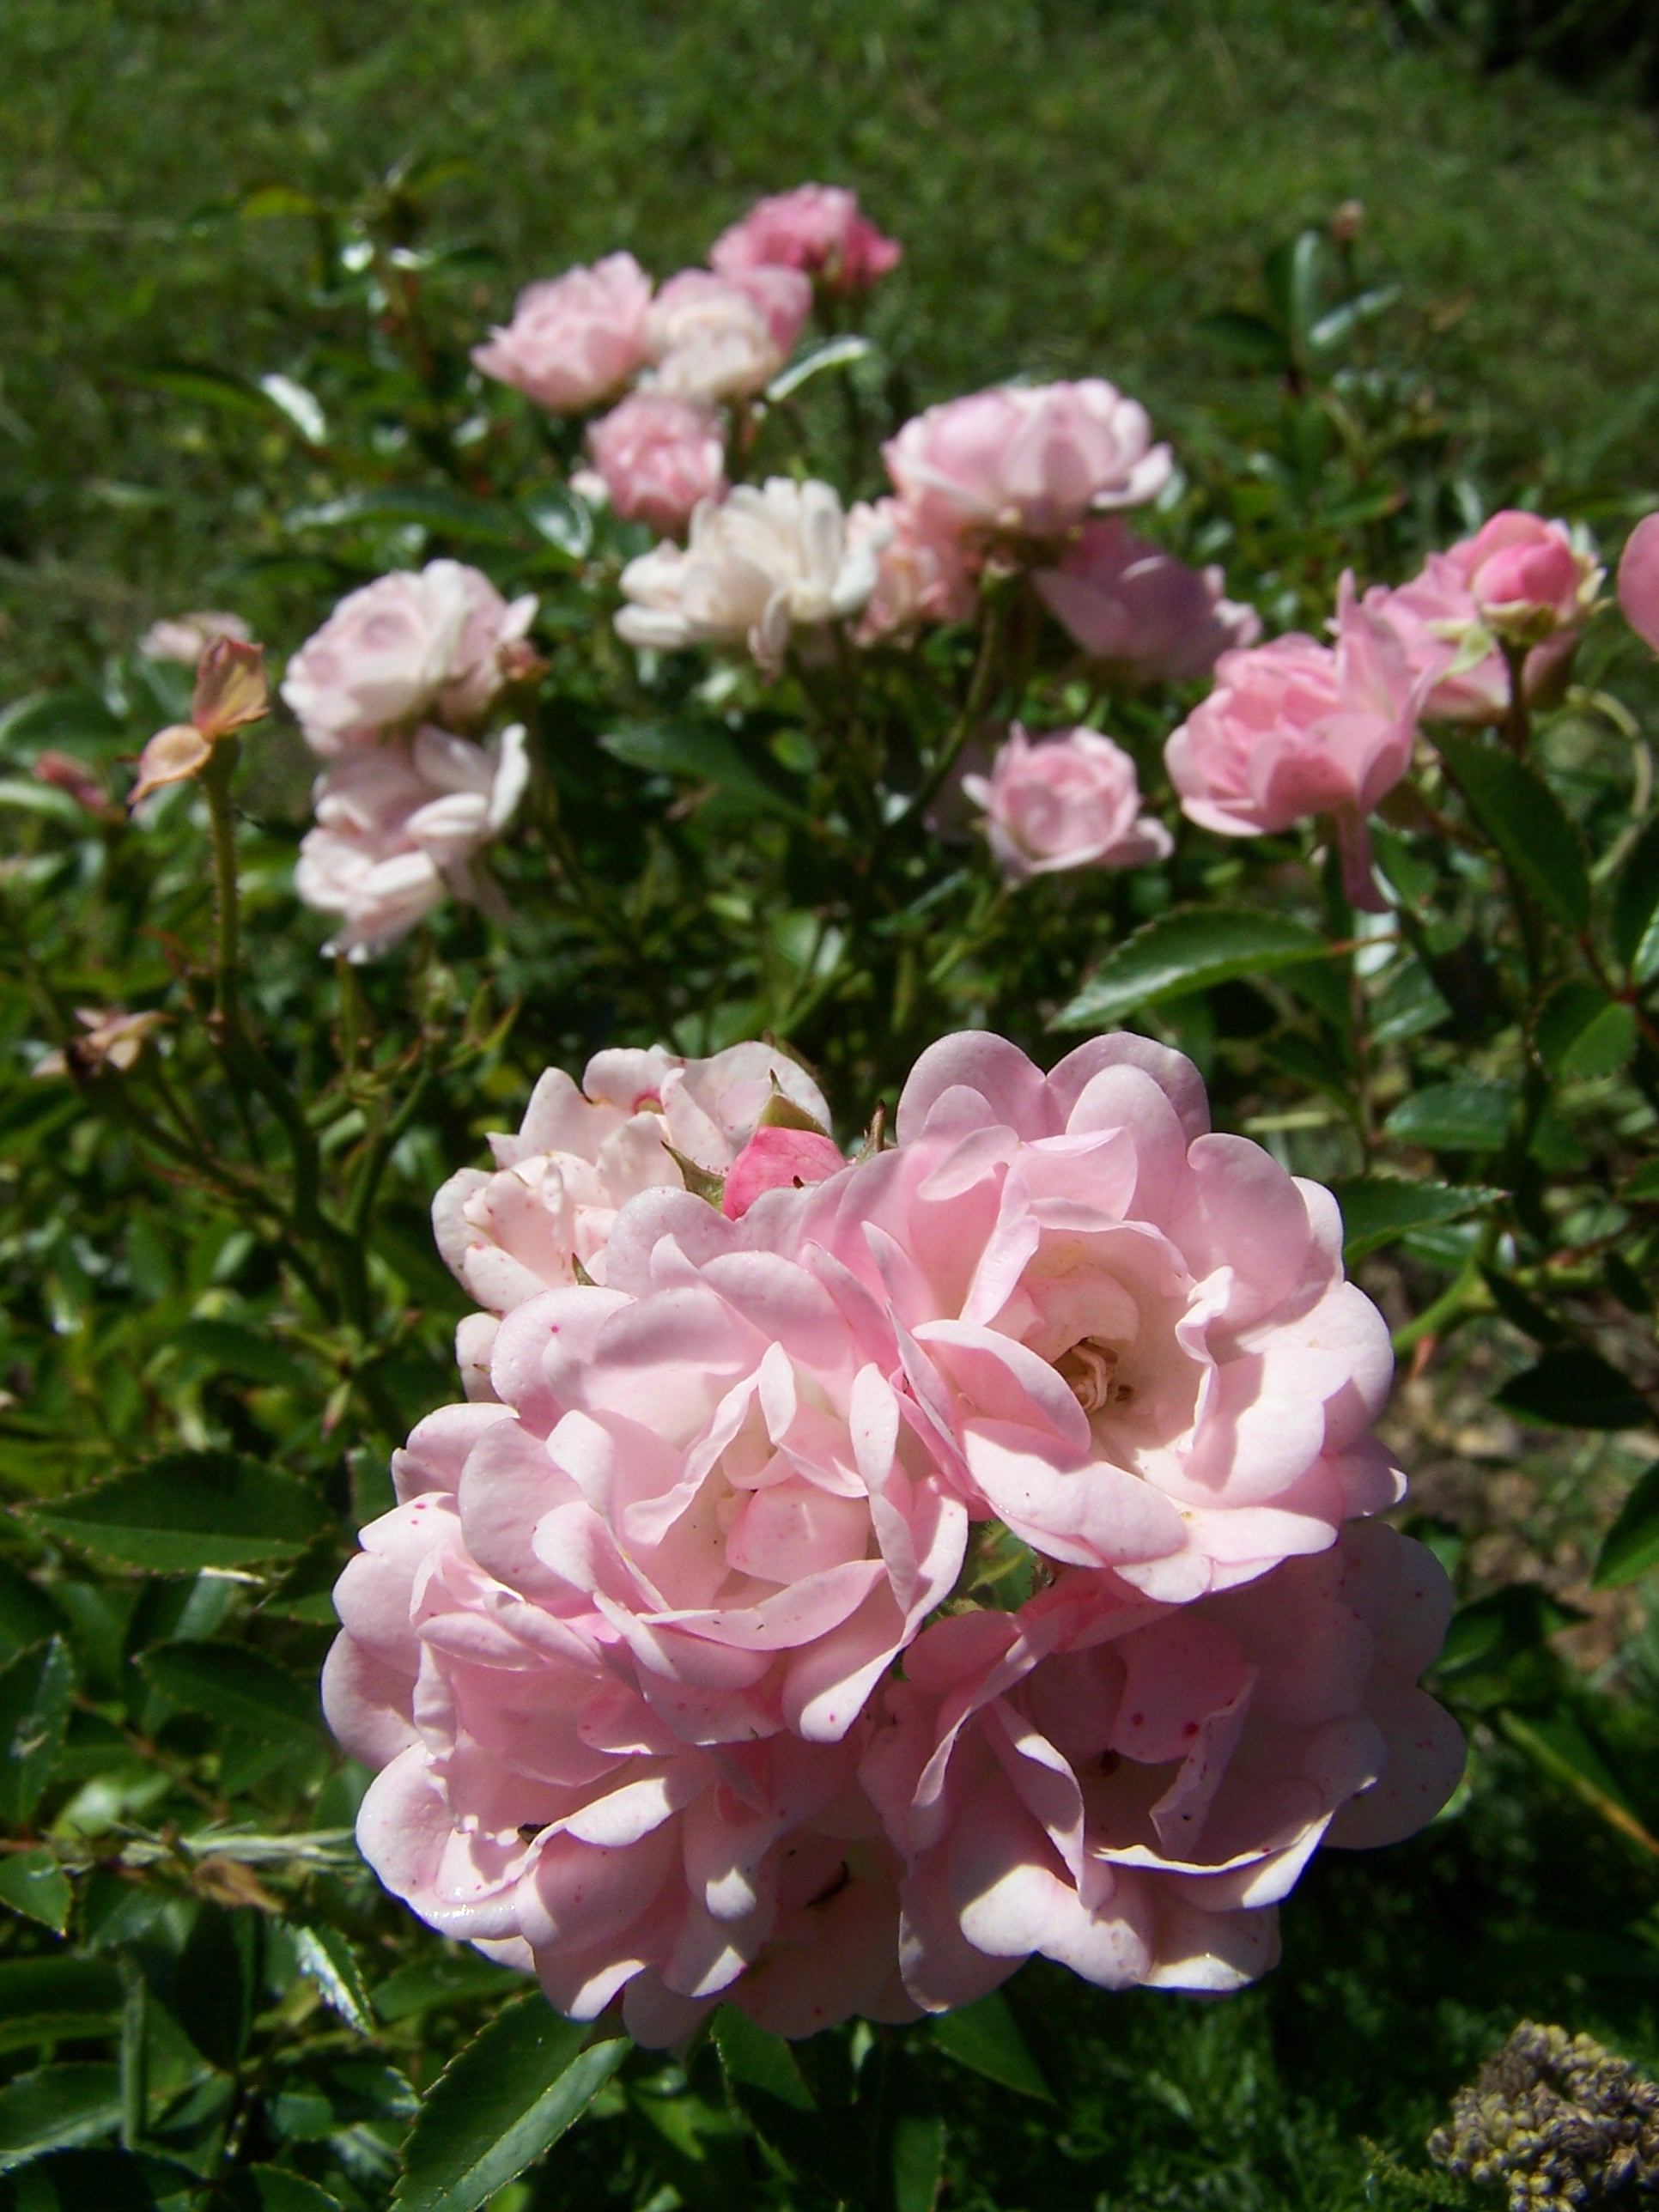 Fairy rose - sweet and beautiful